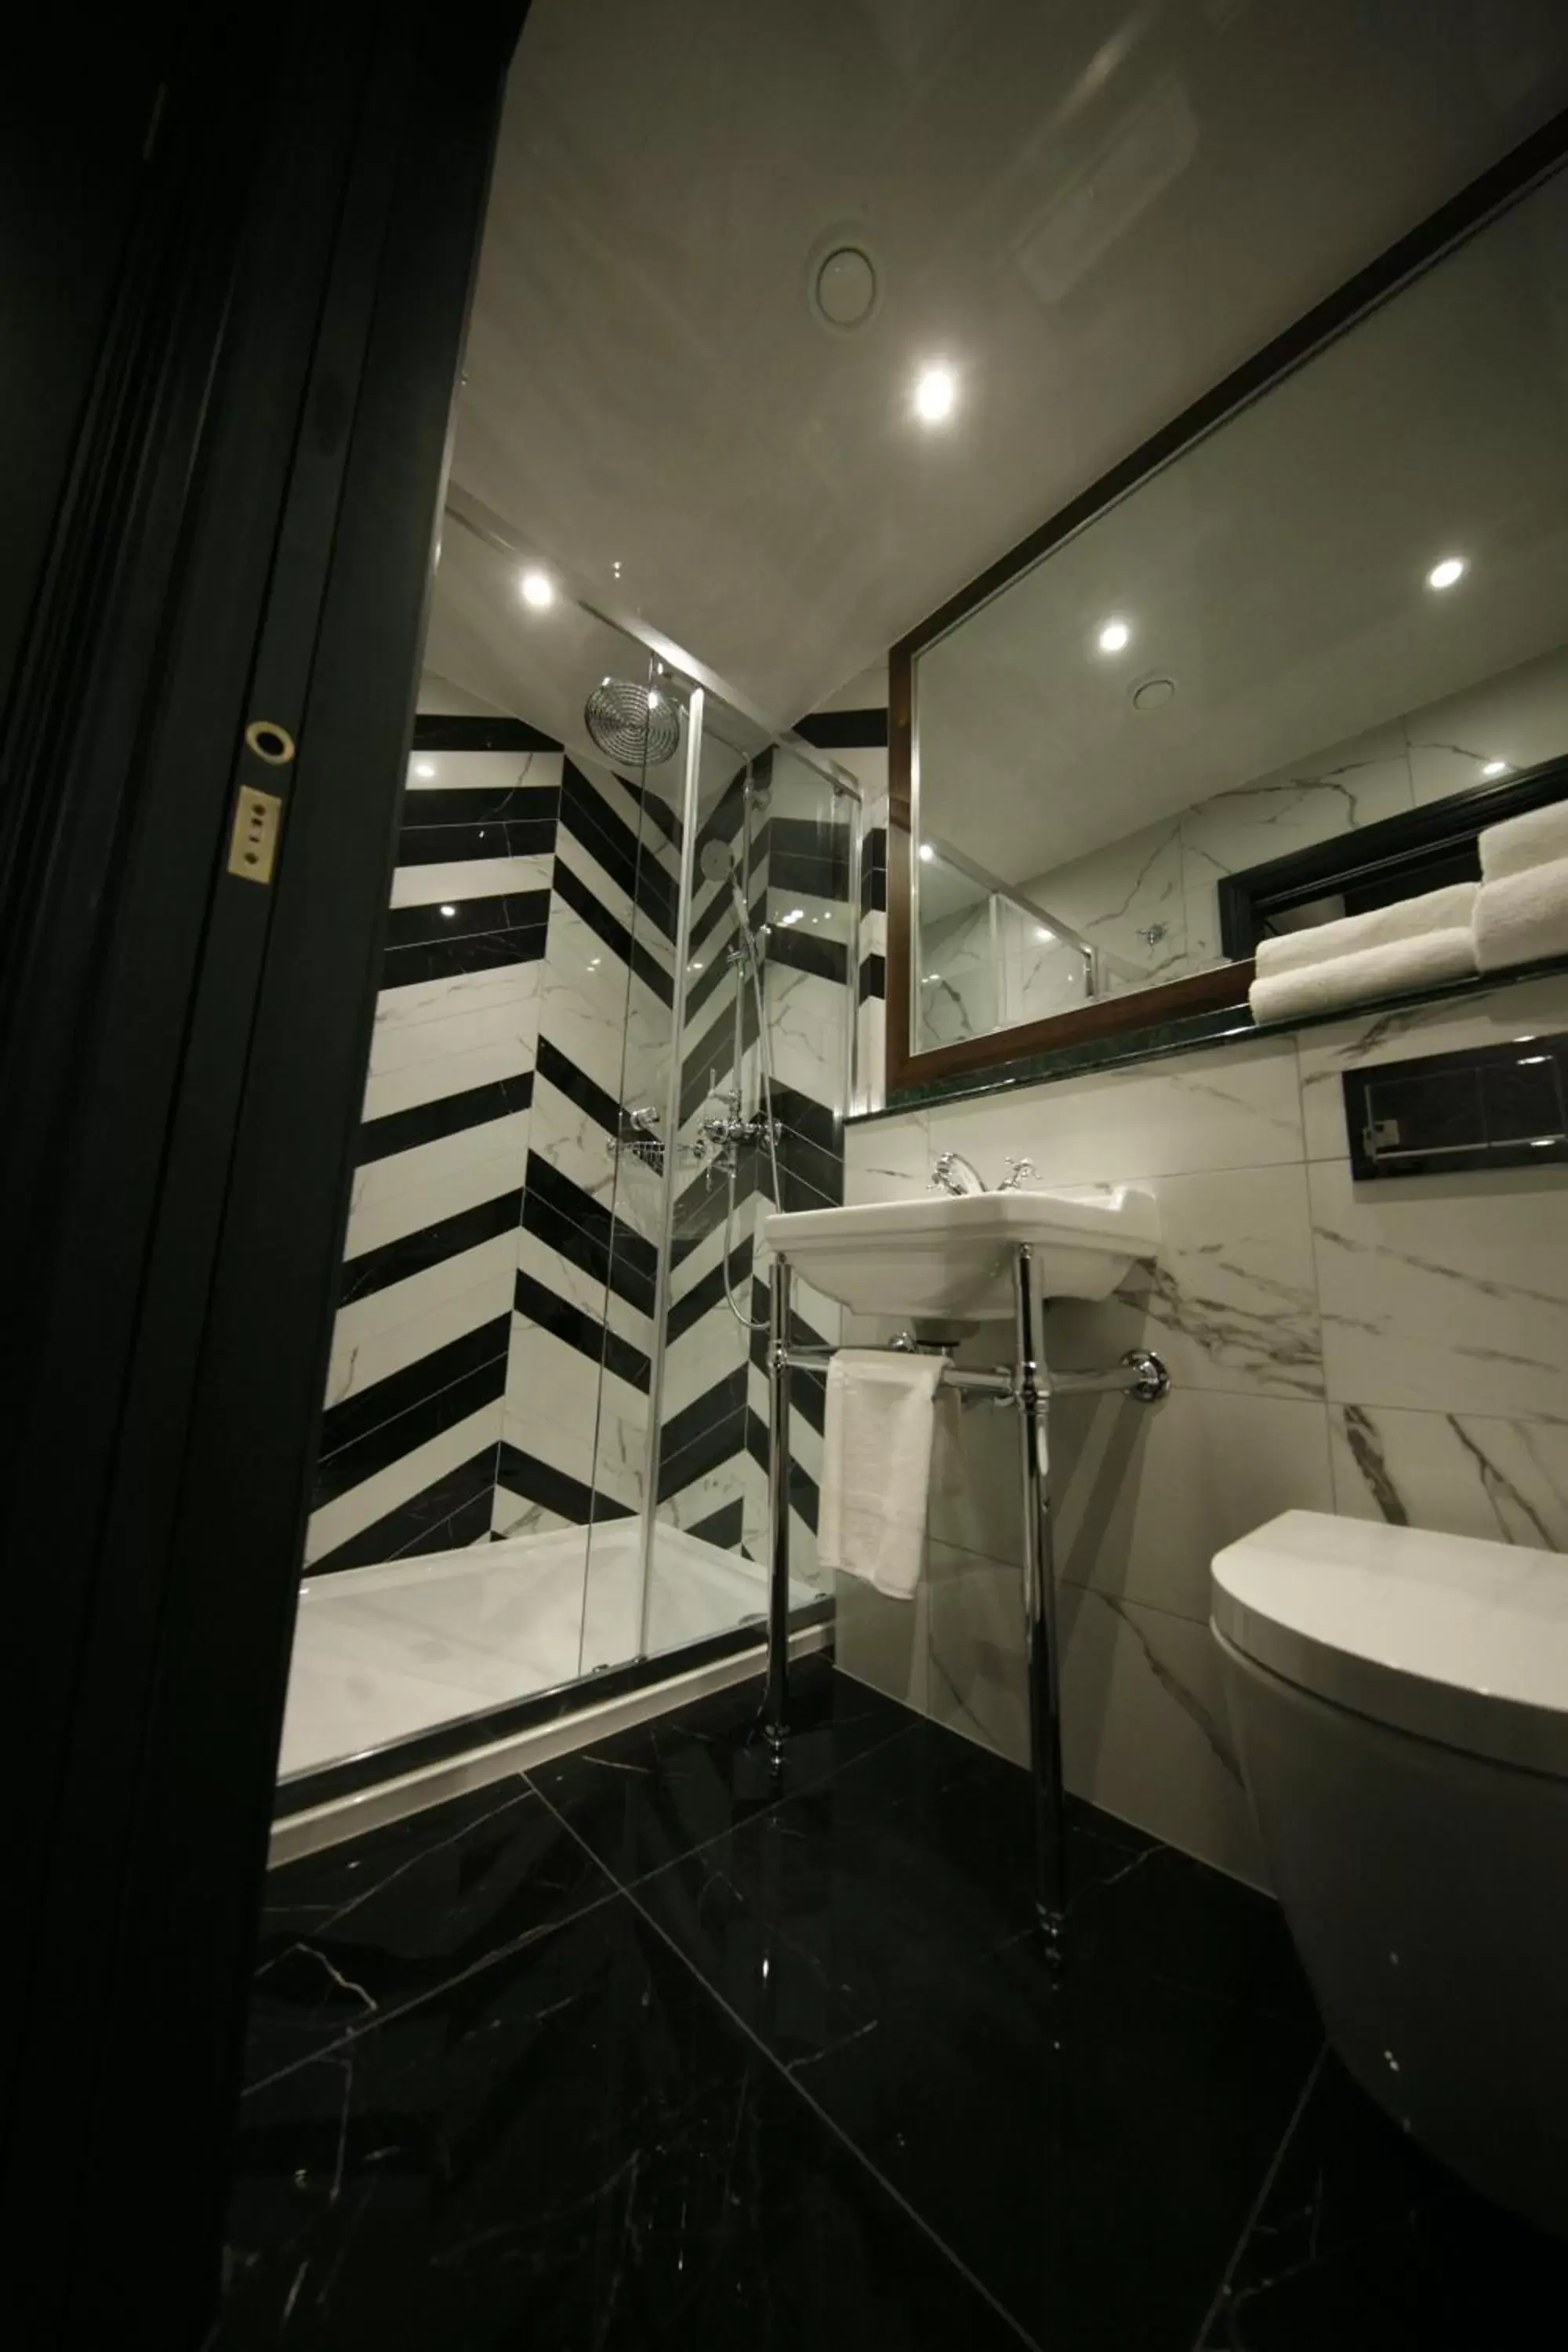 Bathroom in The Portico Hotel